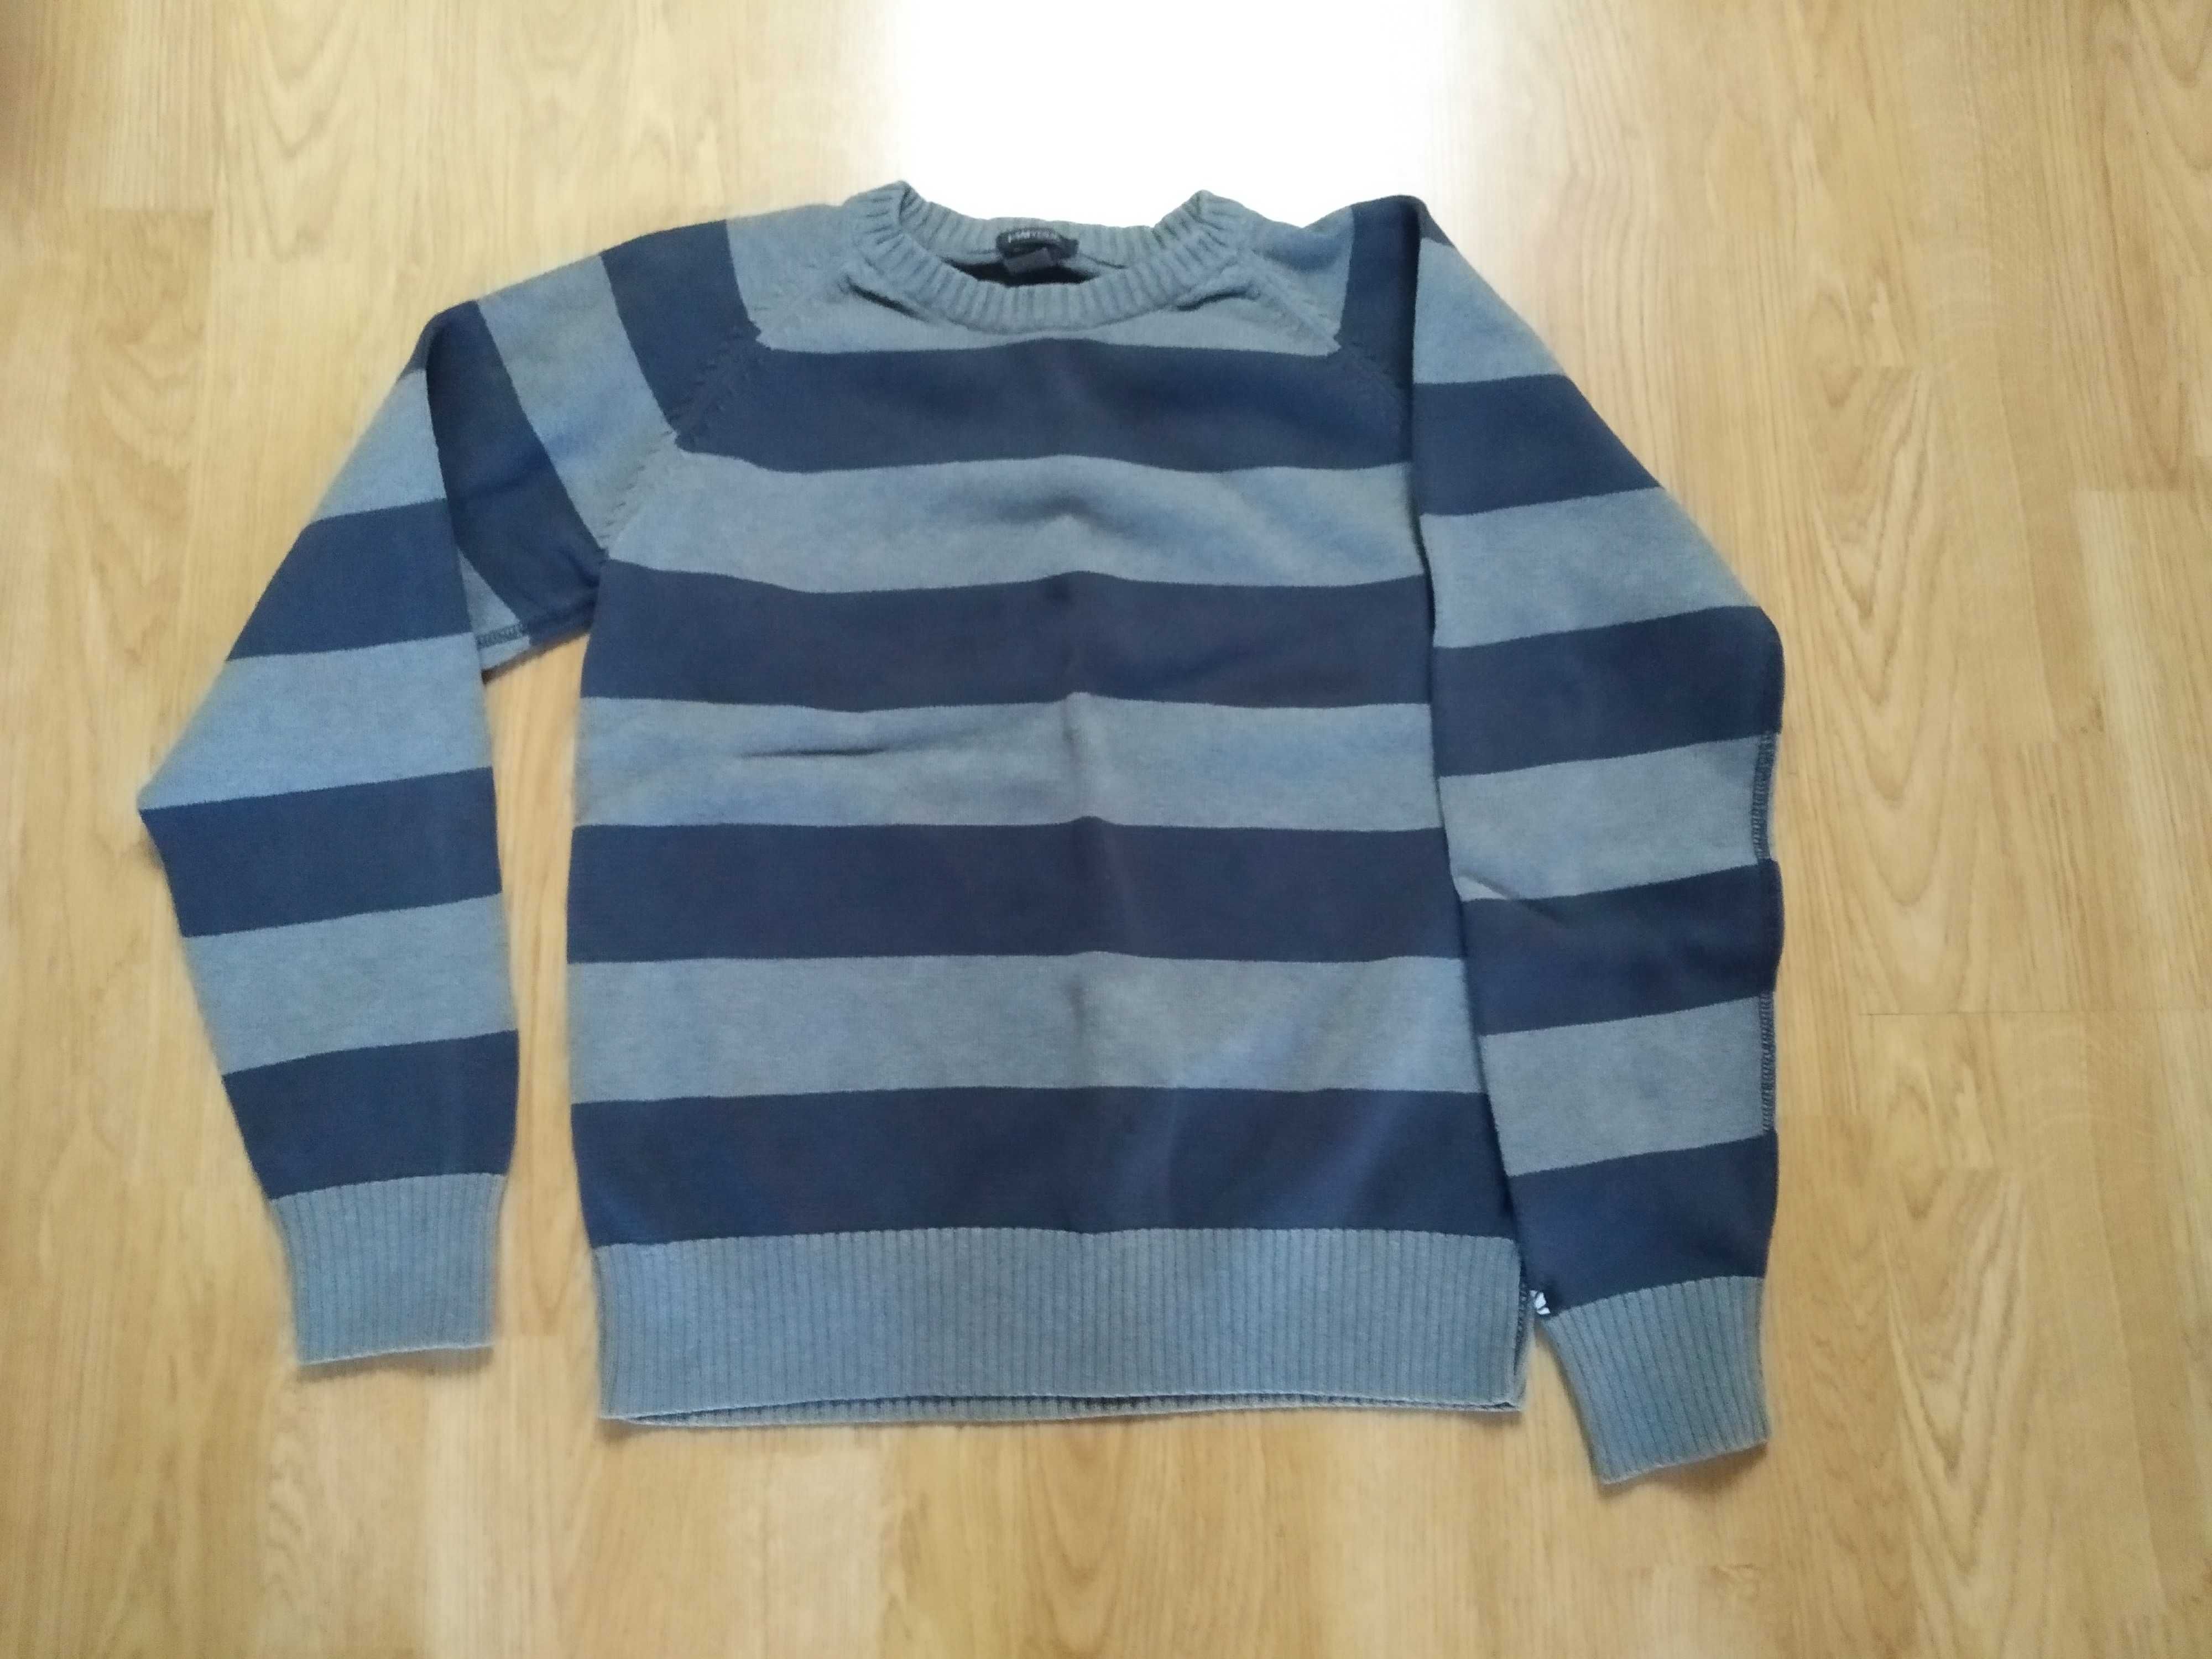 dla chłopaka 12/13 lat ; sweterek, bluza i 3 pary spodni